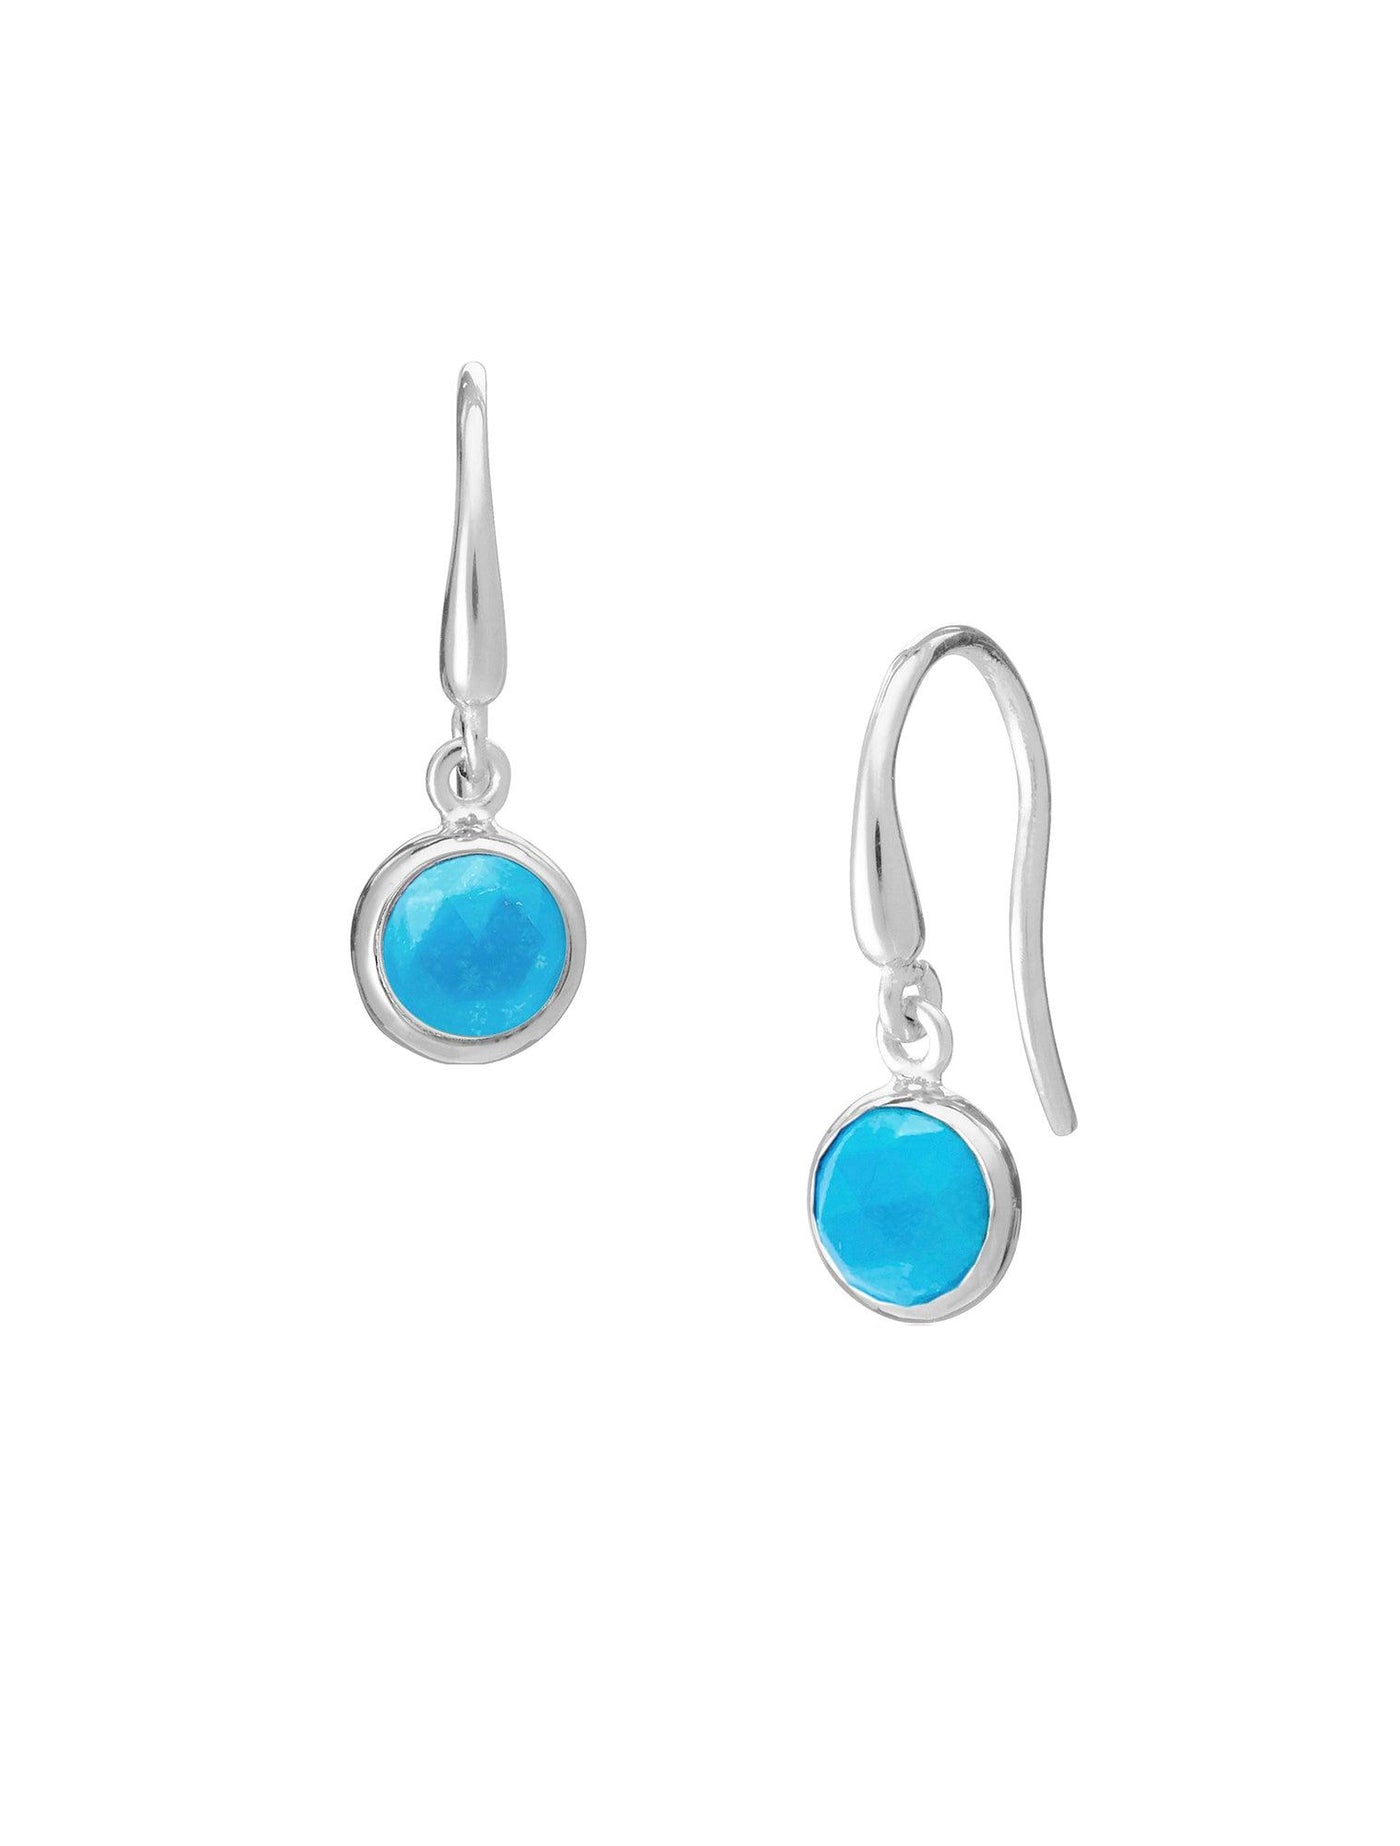 Luceir Jewellery Birthstone Earrings - Turquoise - Rococo Jewellery